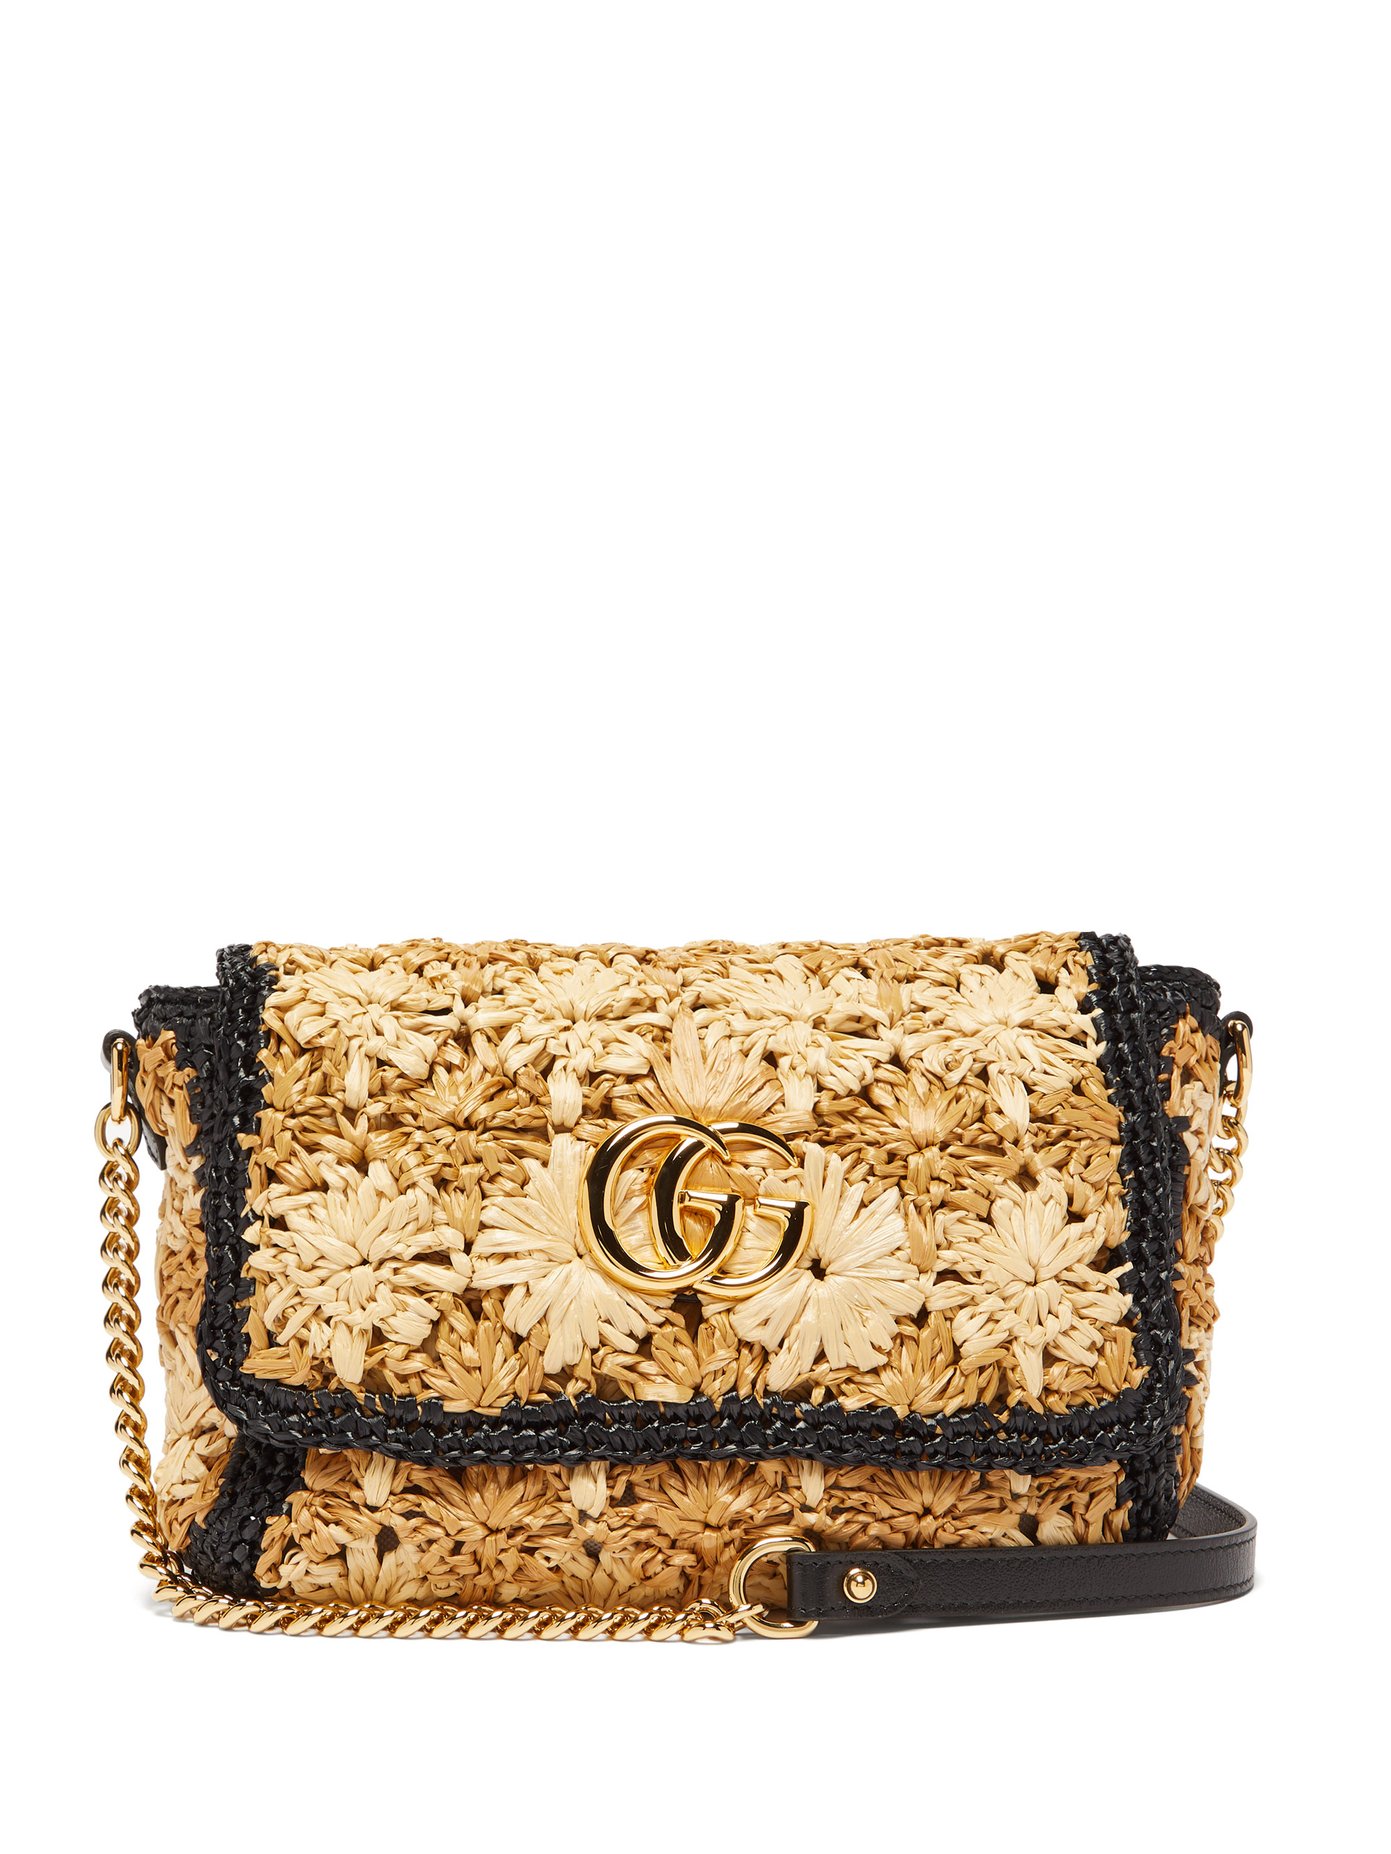 GG Marmont woven shoulder bag | Gucci 